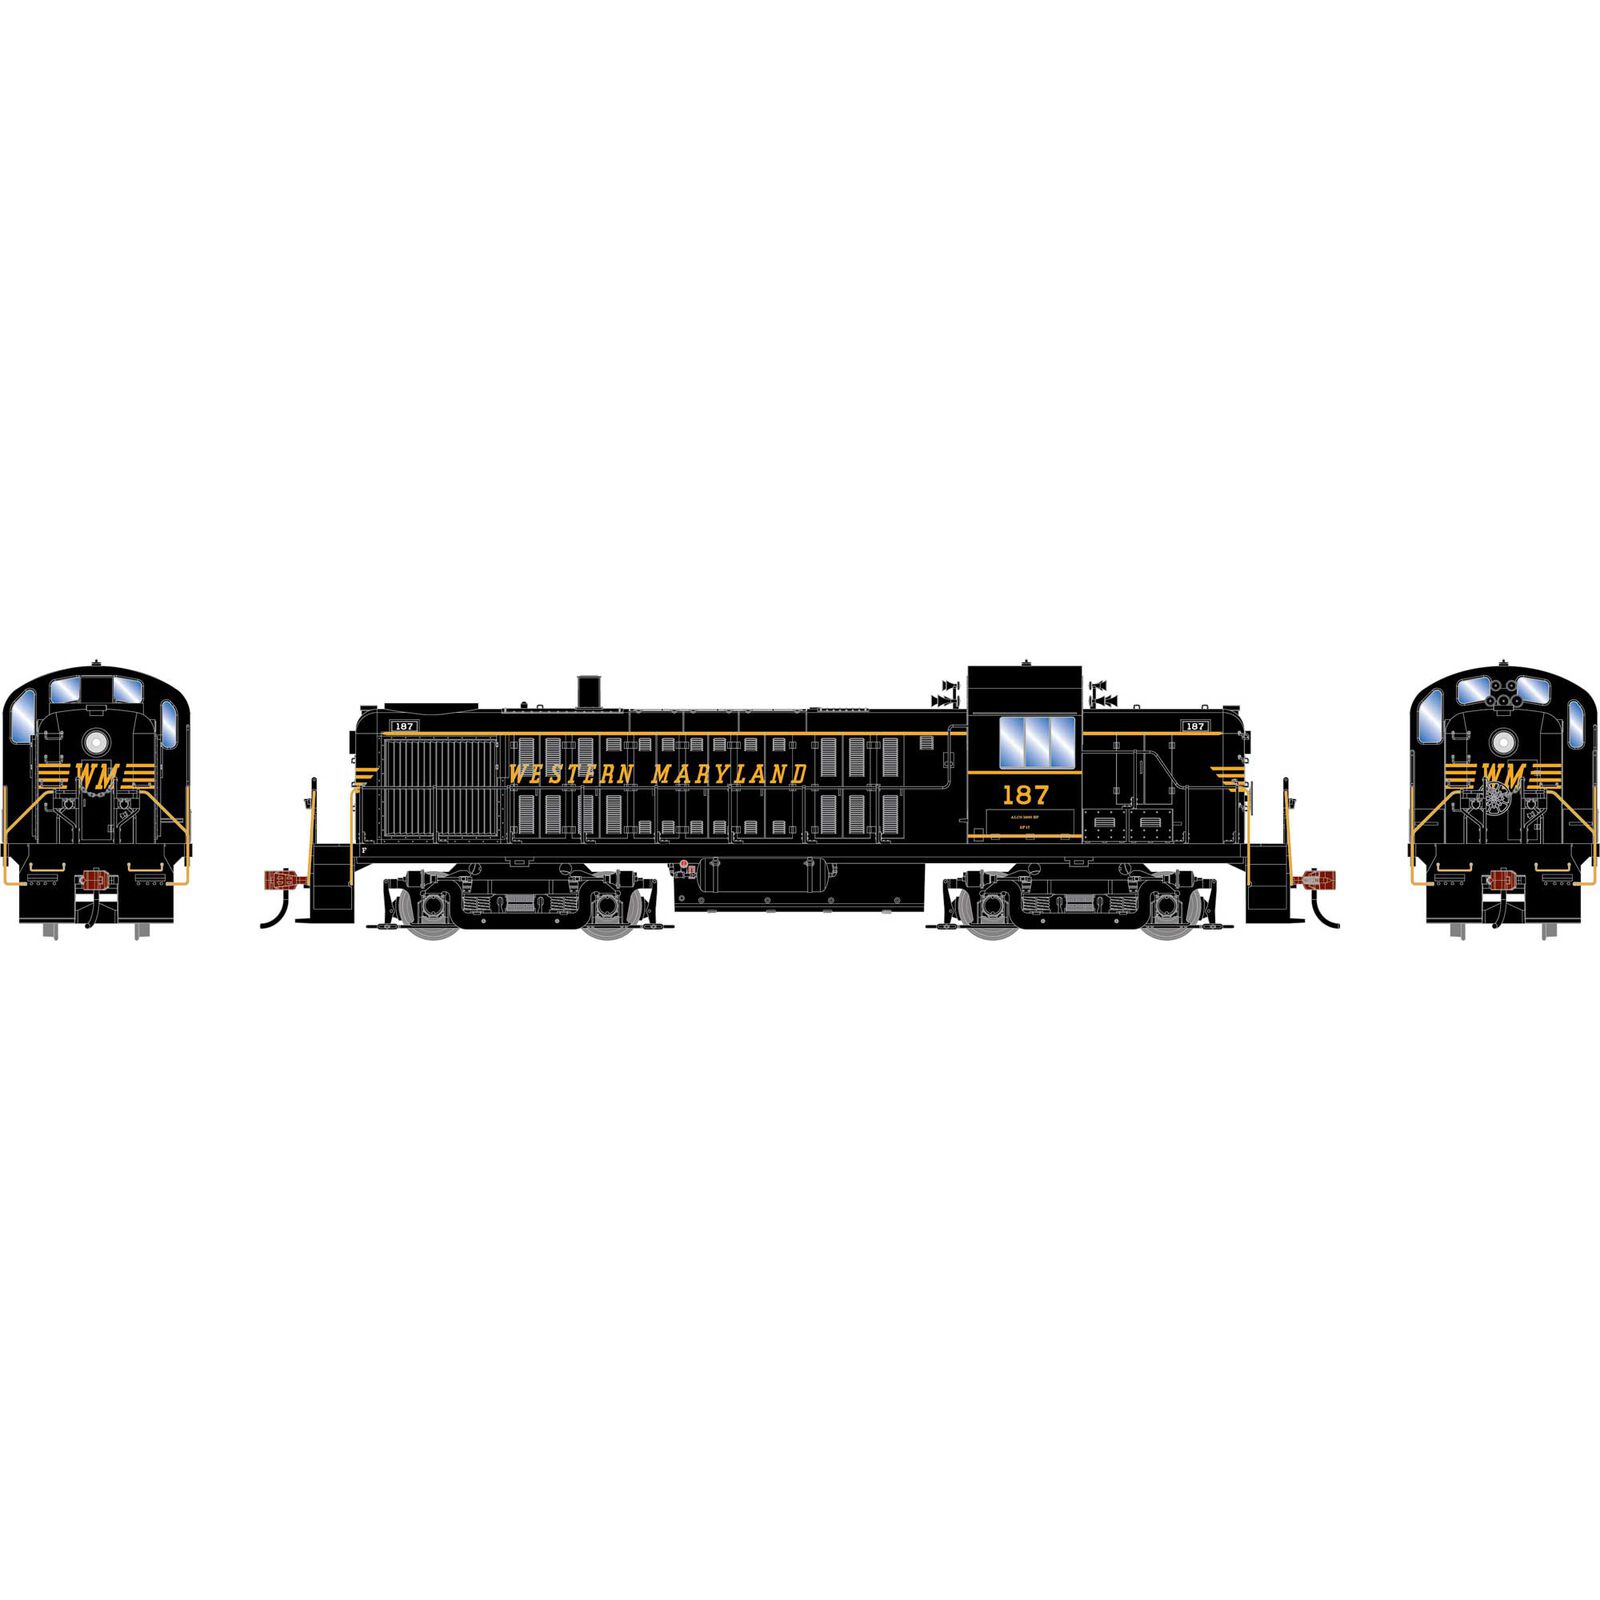 HO RS-3 Locomotive, WM #187